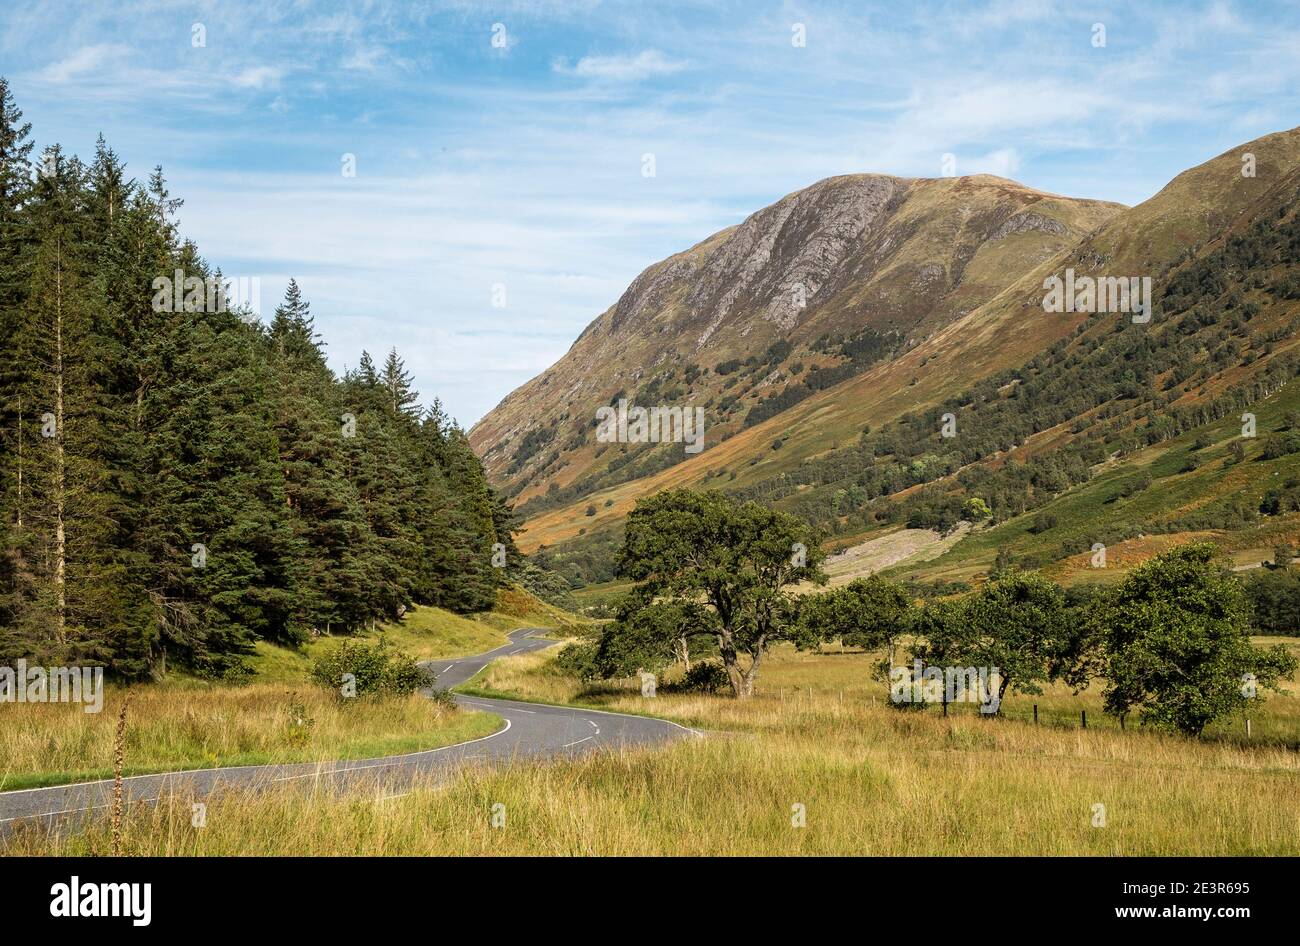 Glen Nevis Scotland in summer. Road snaking through beautiful Scottish scenery beneath the lower slopes of Ben Nevis. Stock Photo